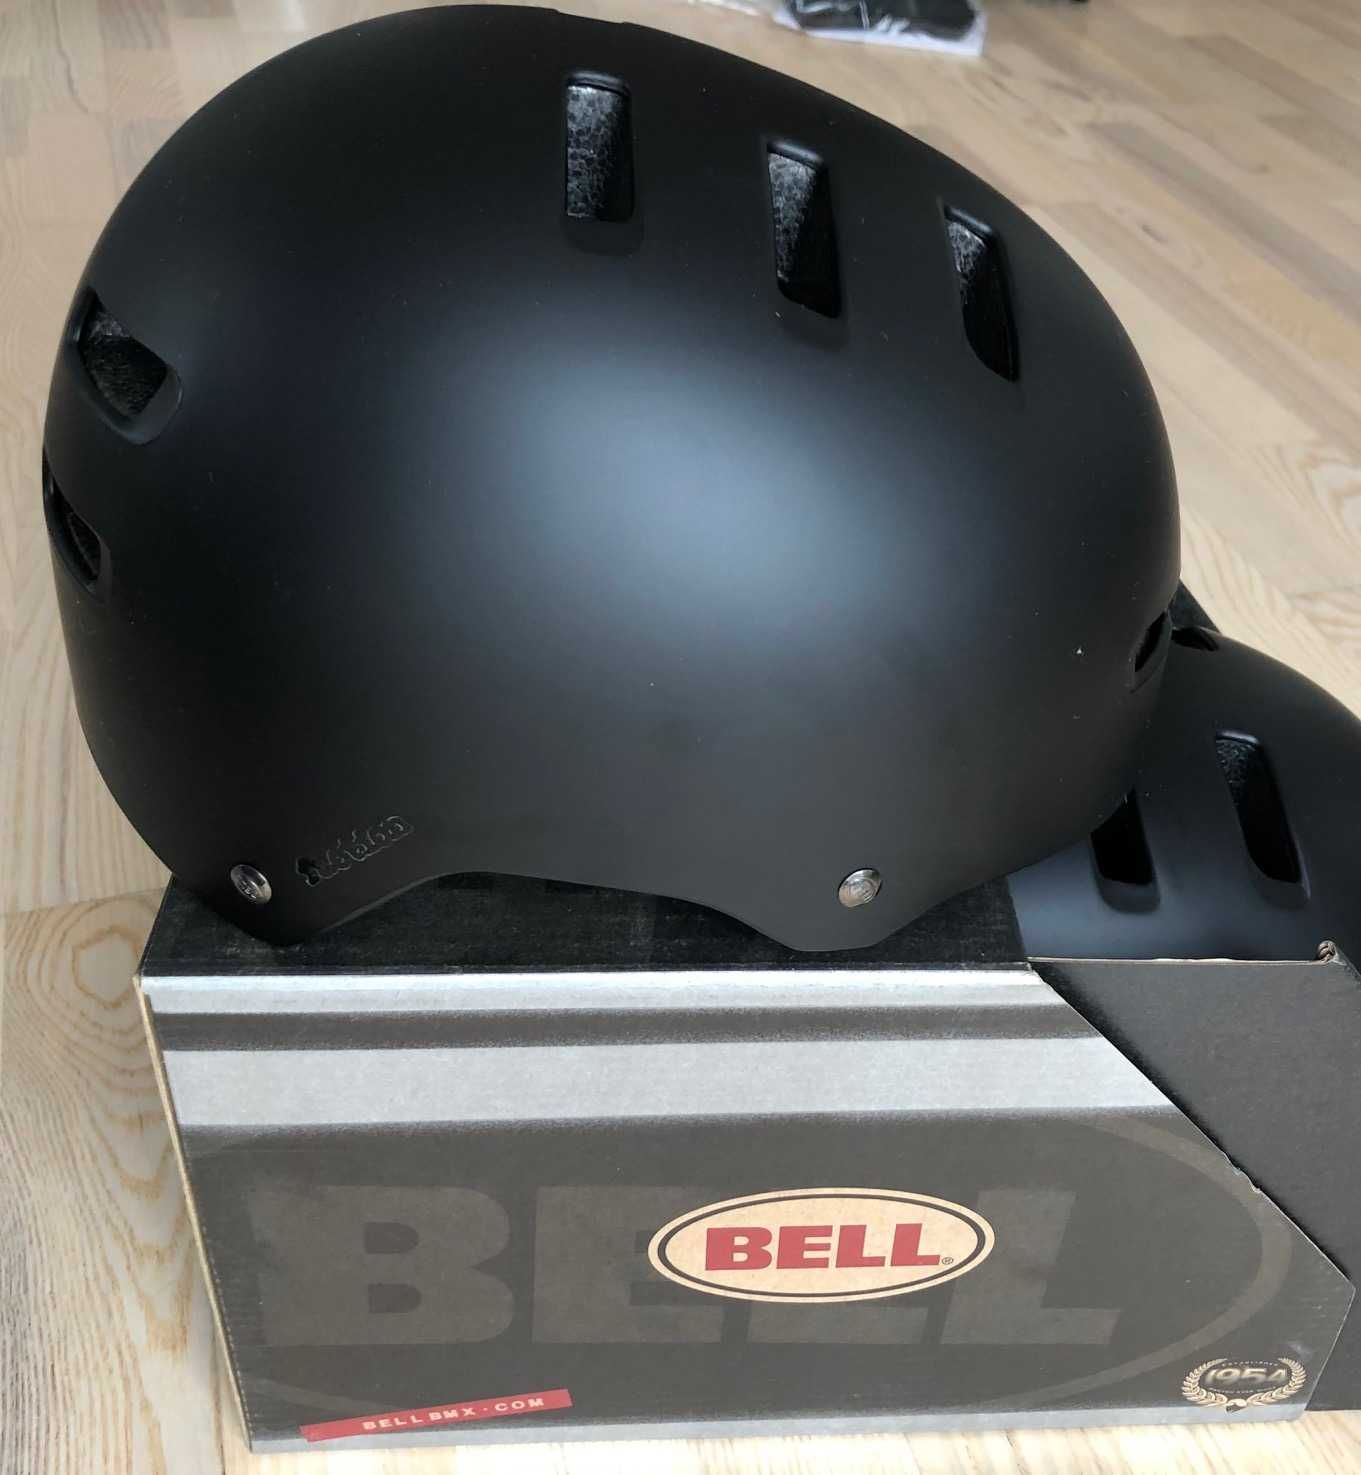 Enduro Bell FACTION Super 3 R M nowy kask Oś roweru mtb skate rolki